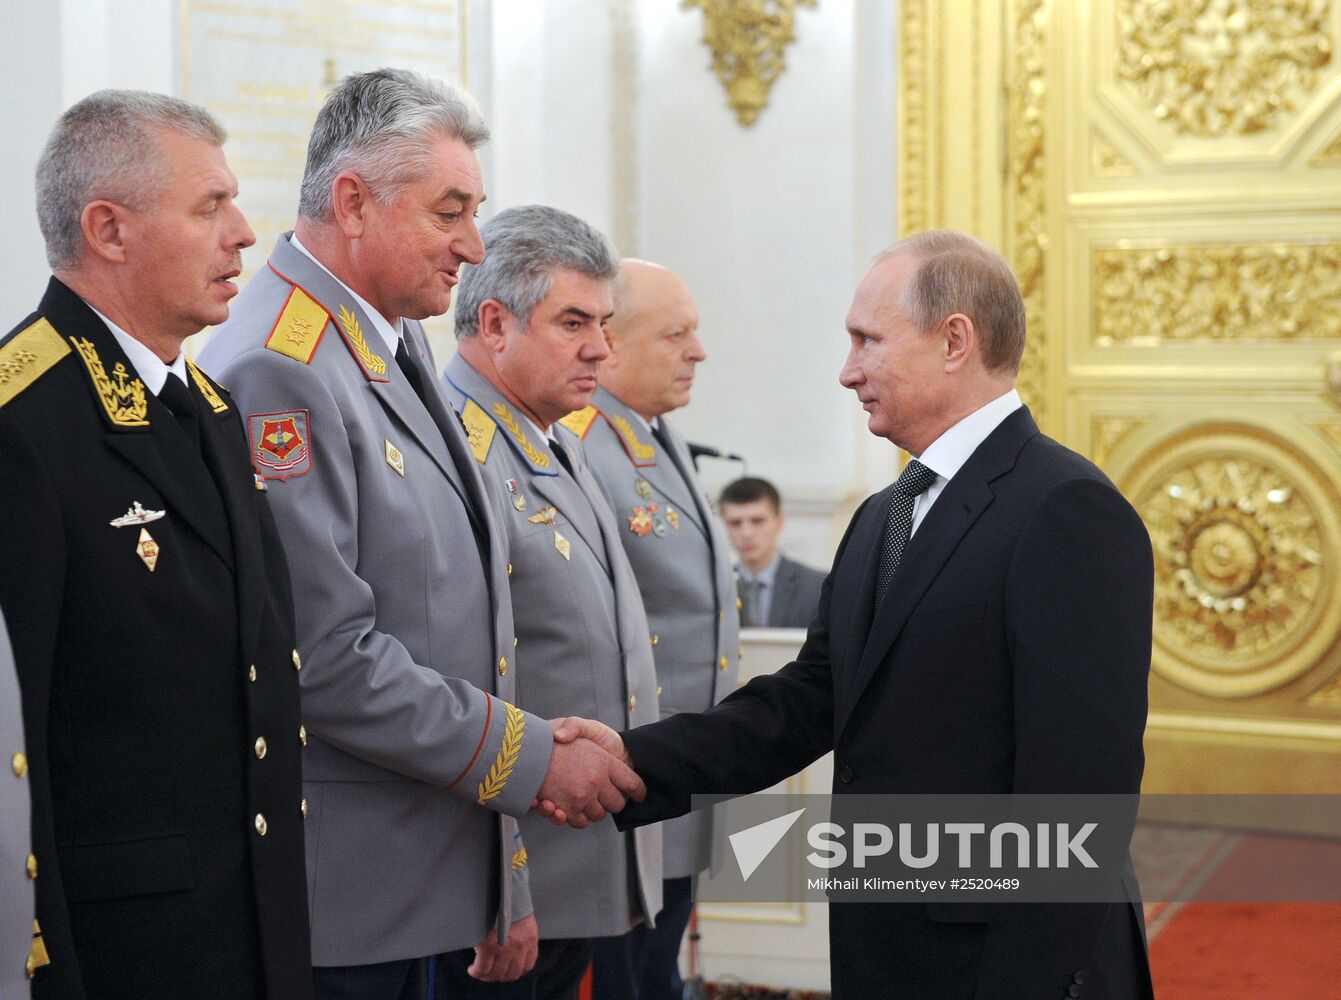 Vladimir Putin introduces senior officers in the Kremlin